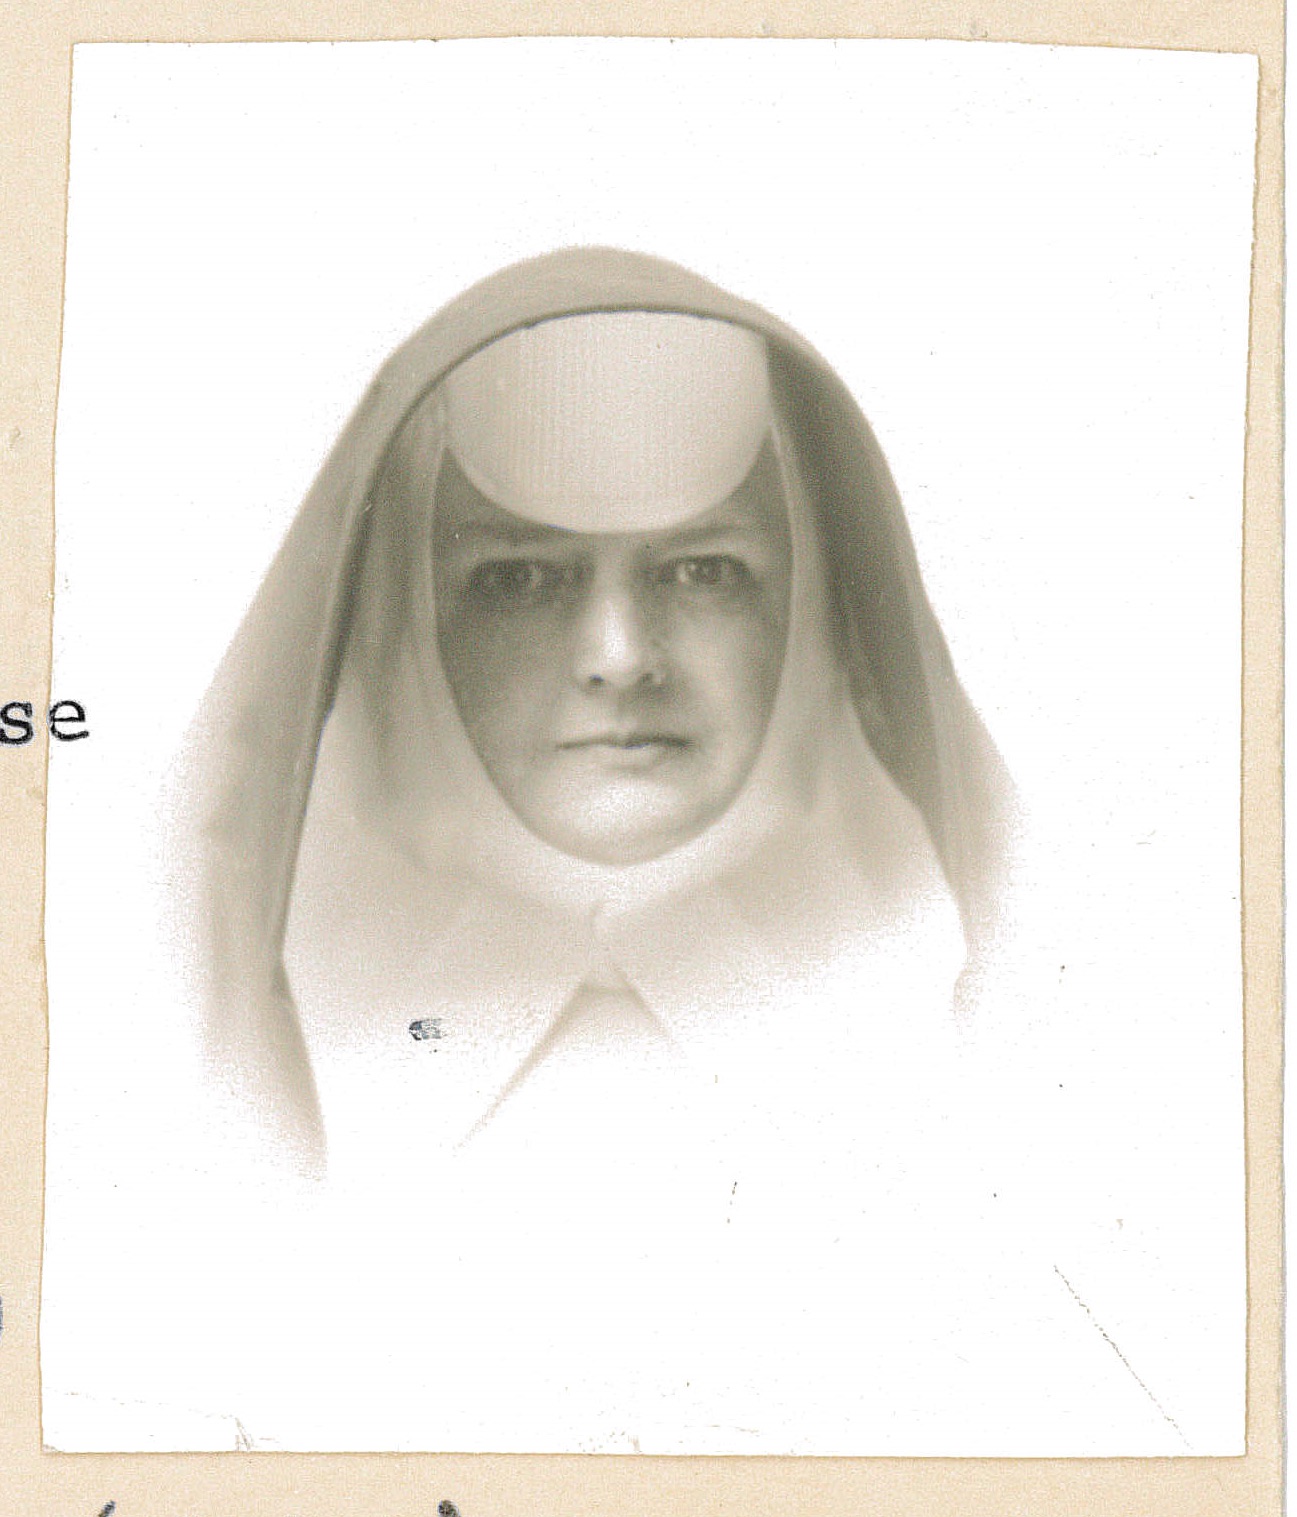 Sister Edwina